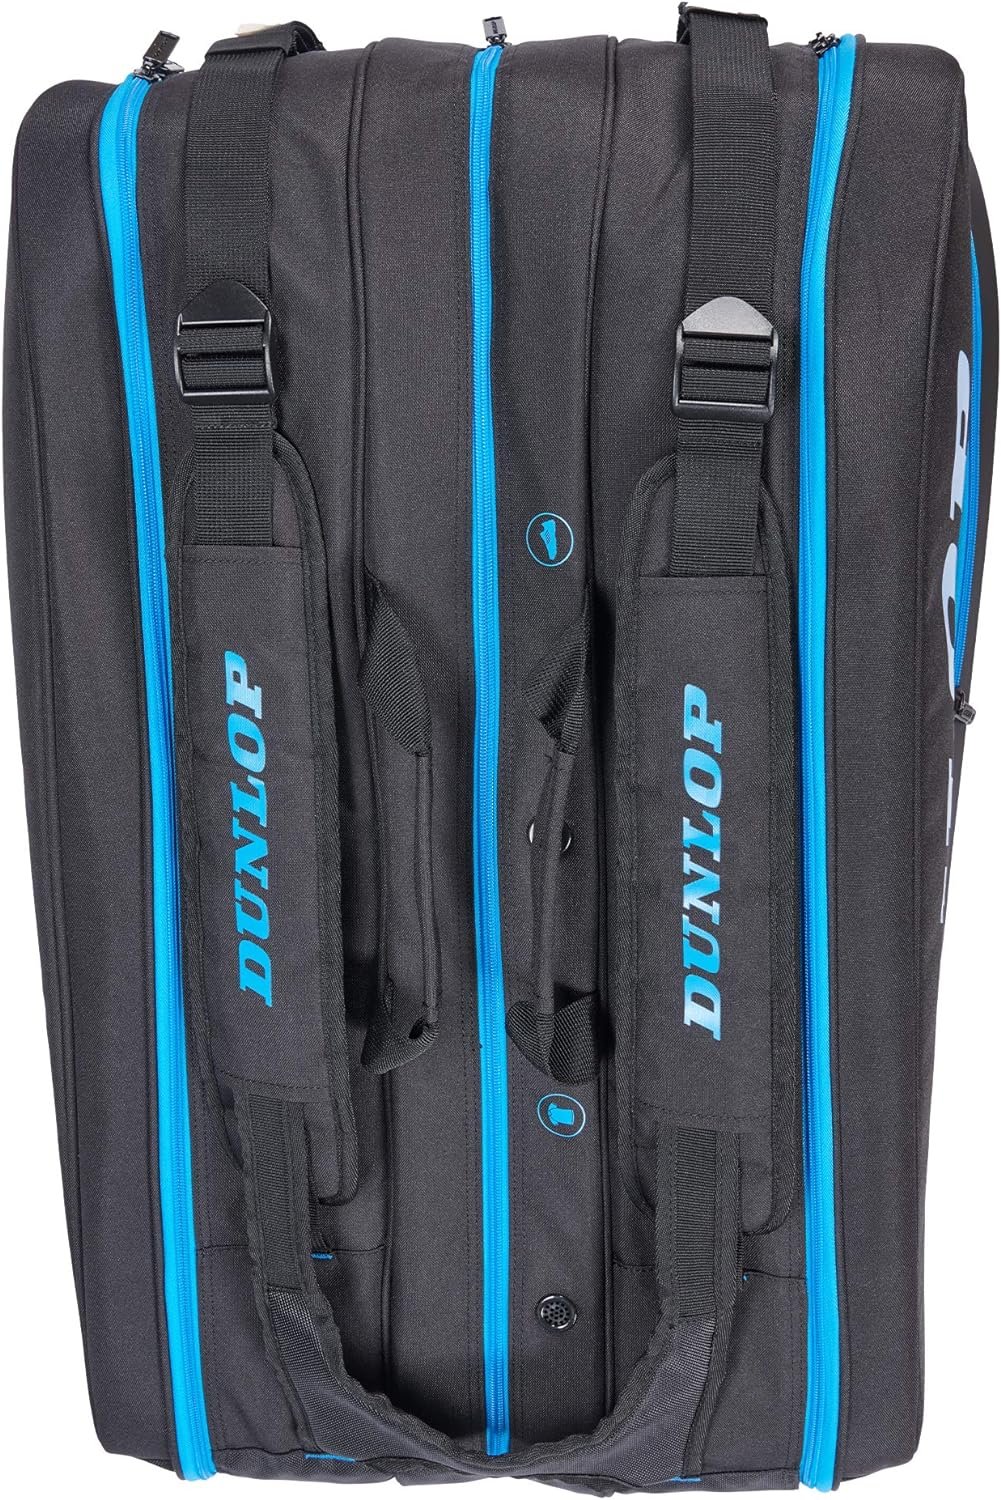 Dunlop Sports PSA 12 Squash Racket Bag, Blue/Black